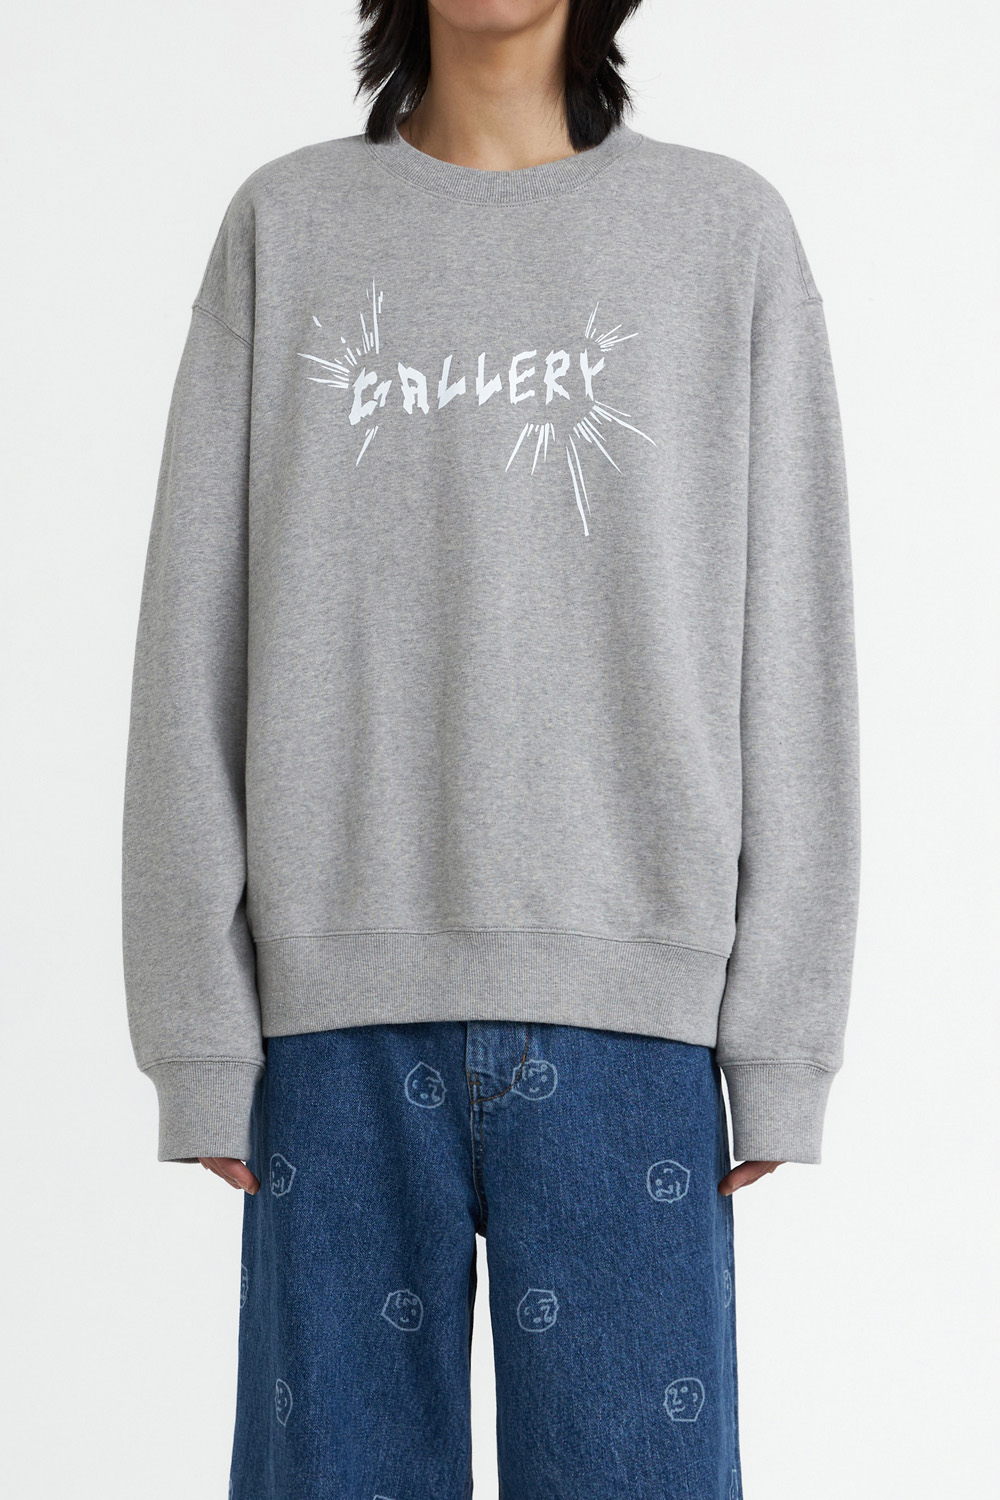 Gallery Bomb Graphic Sweatshirt - Grey